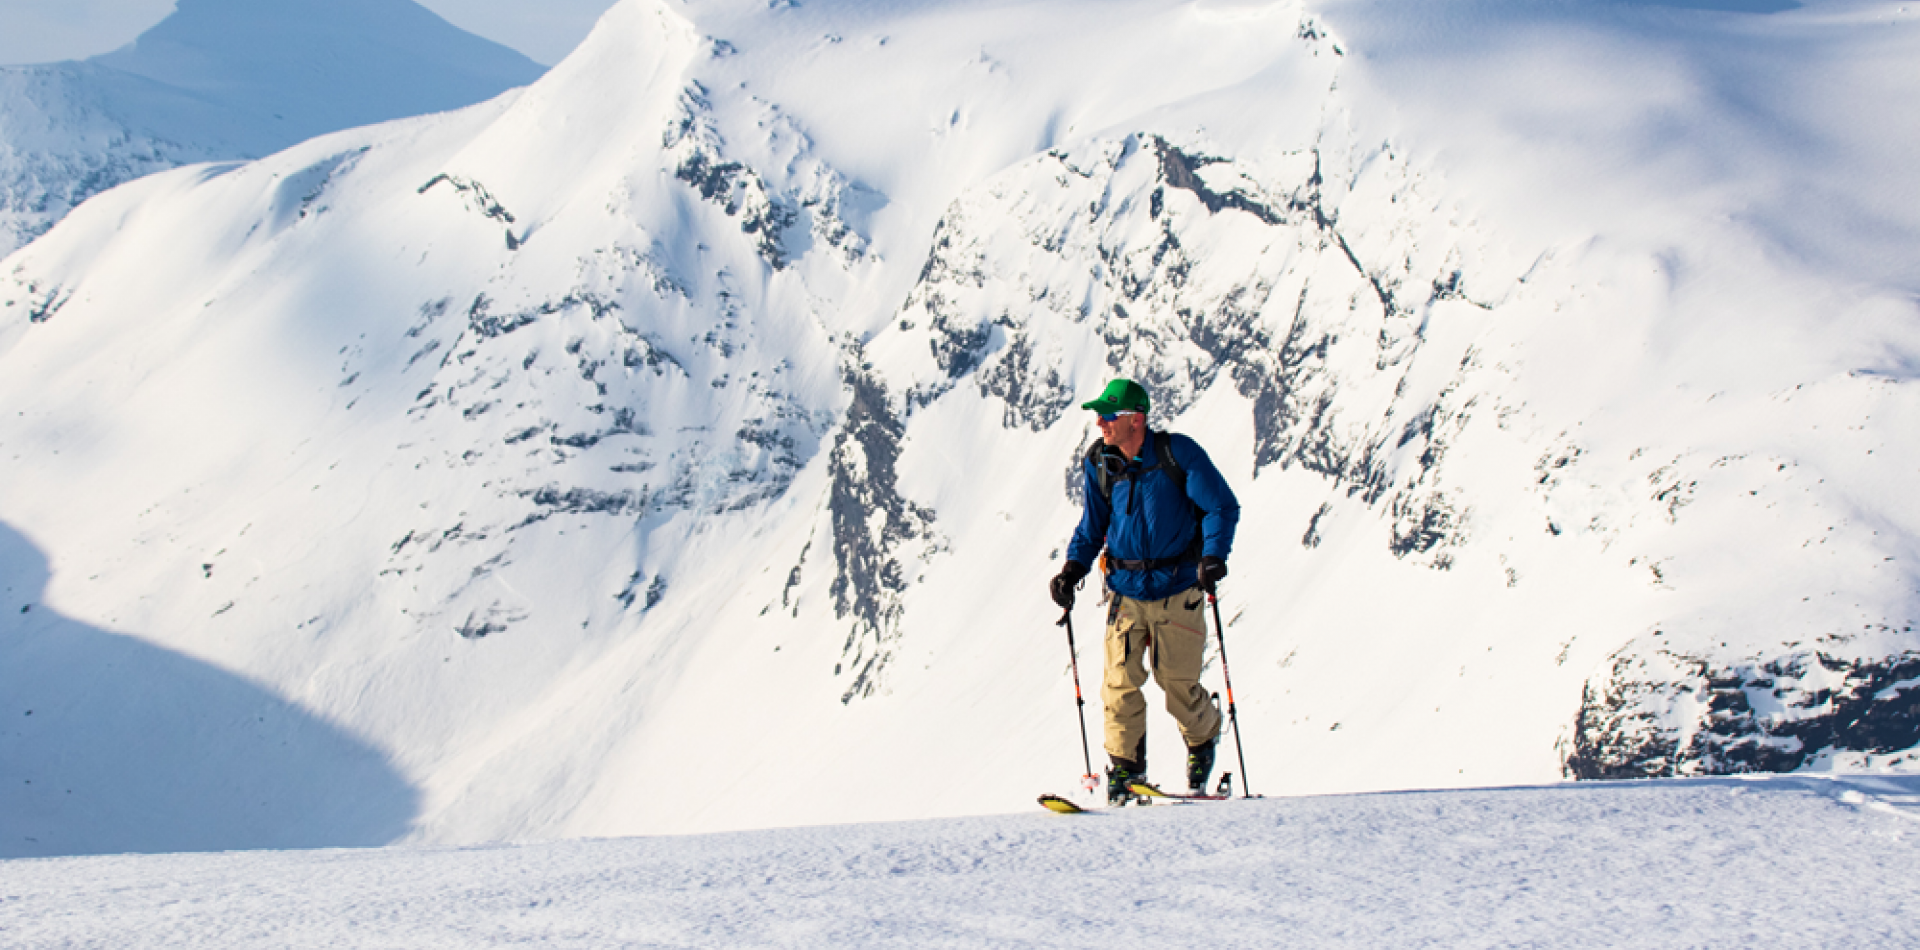 Ski touring in the Narvik region